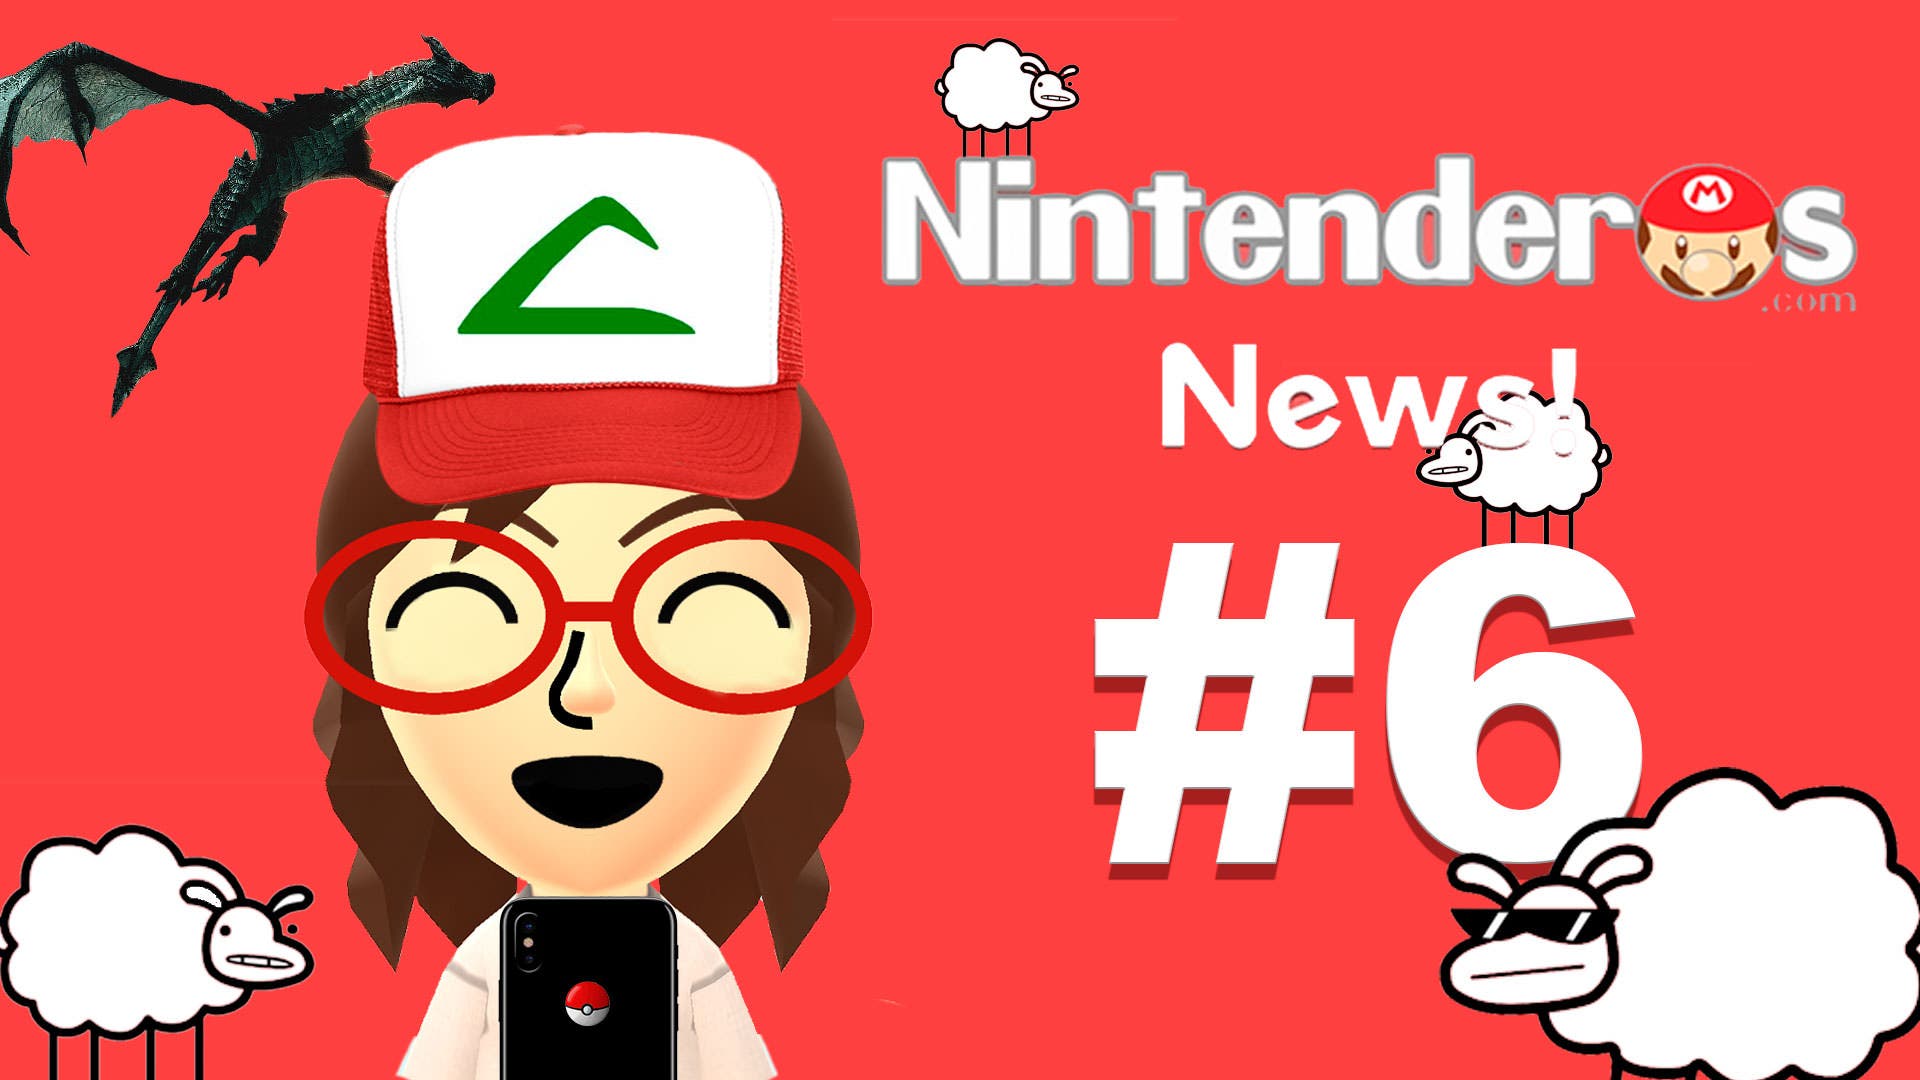 Nintenderos News! #6 Pokémon GO rural, Skyrim PC VS Switch y más